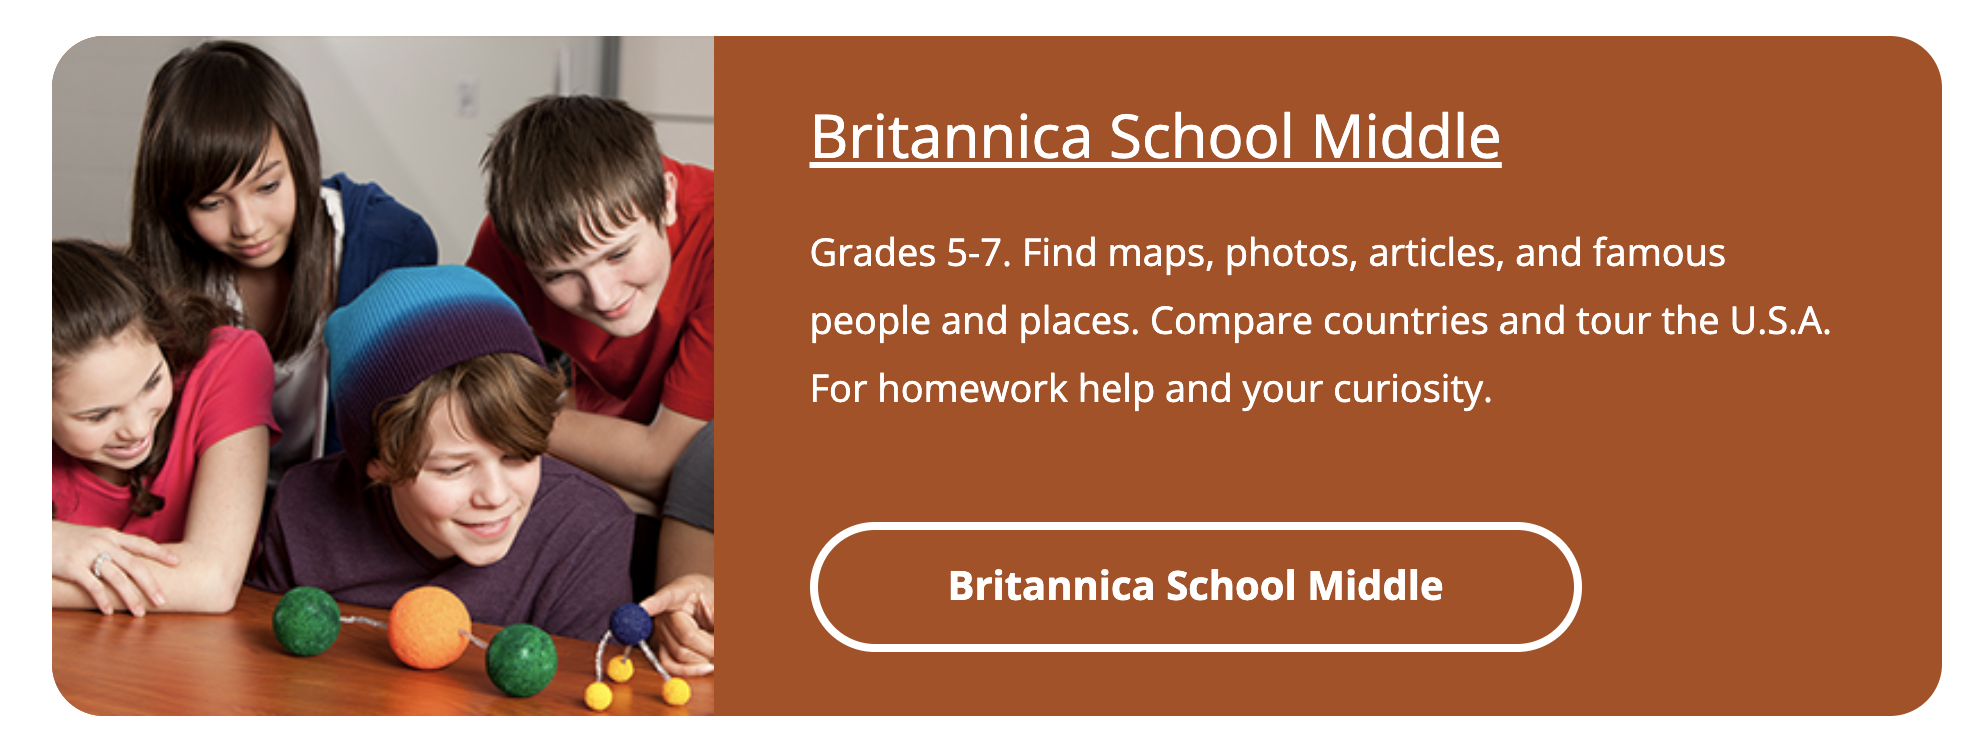 Britannica School Middle